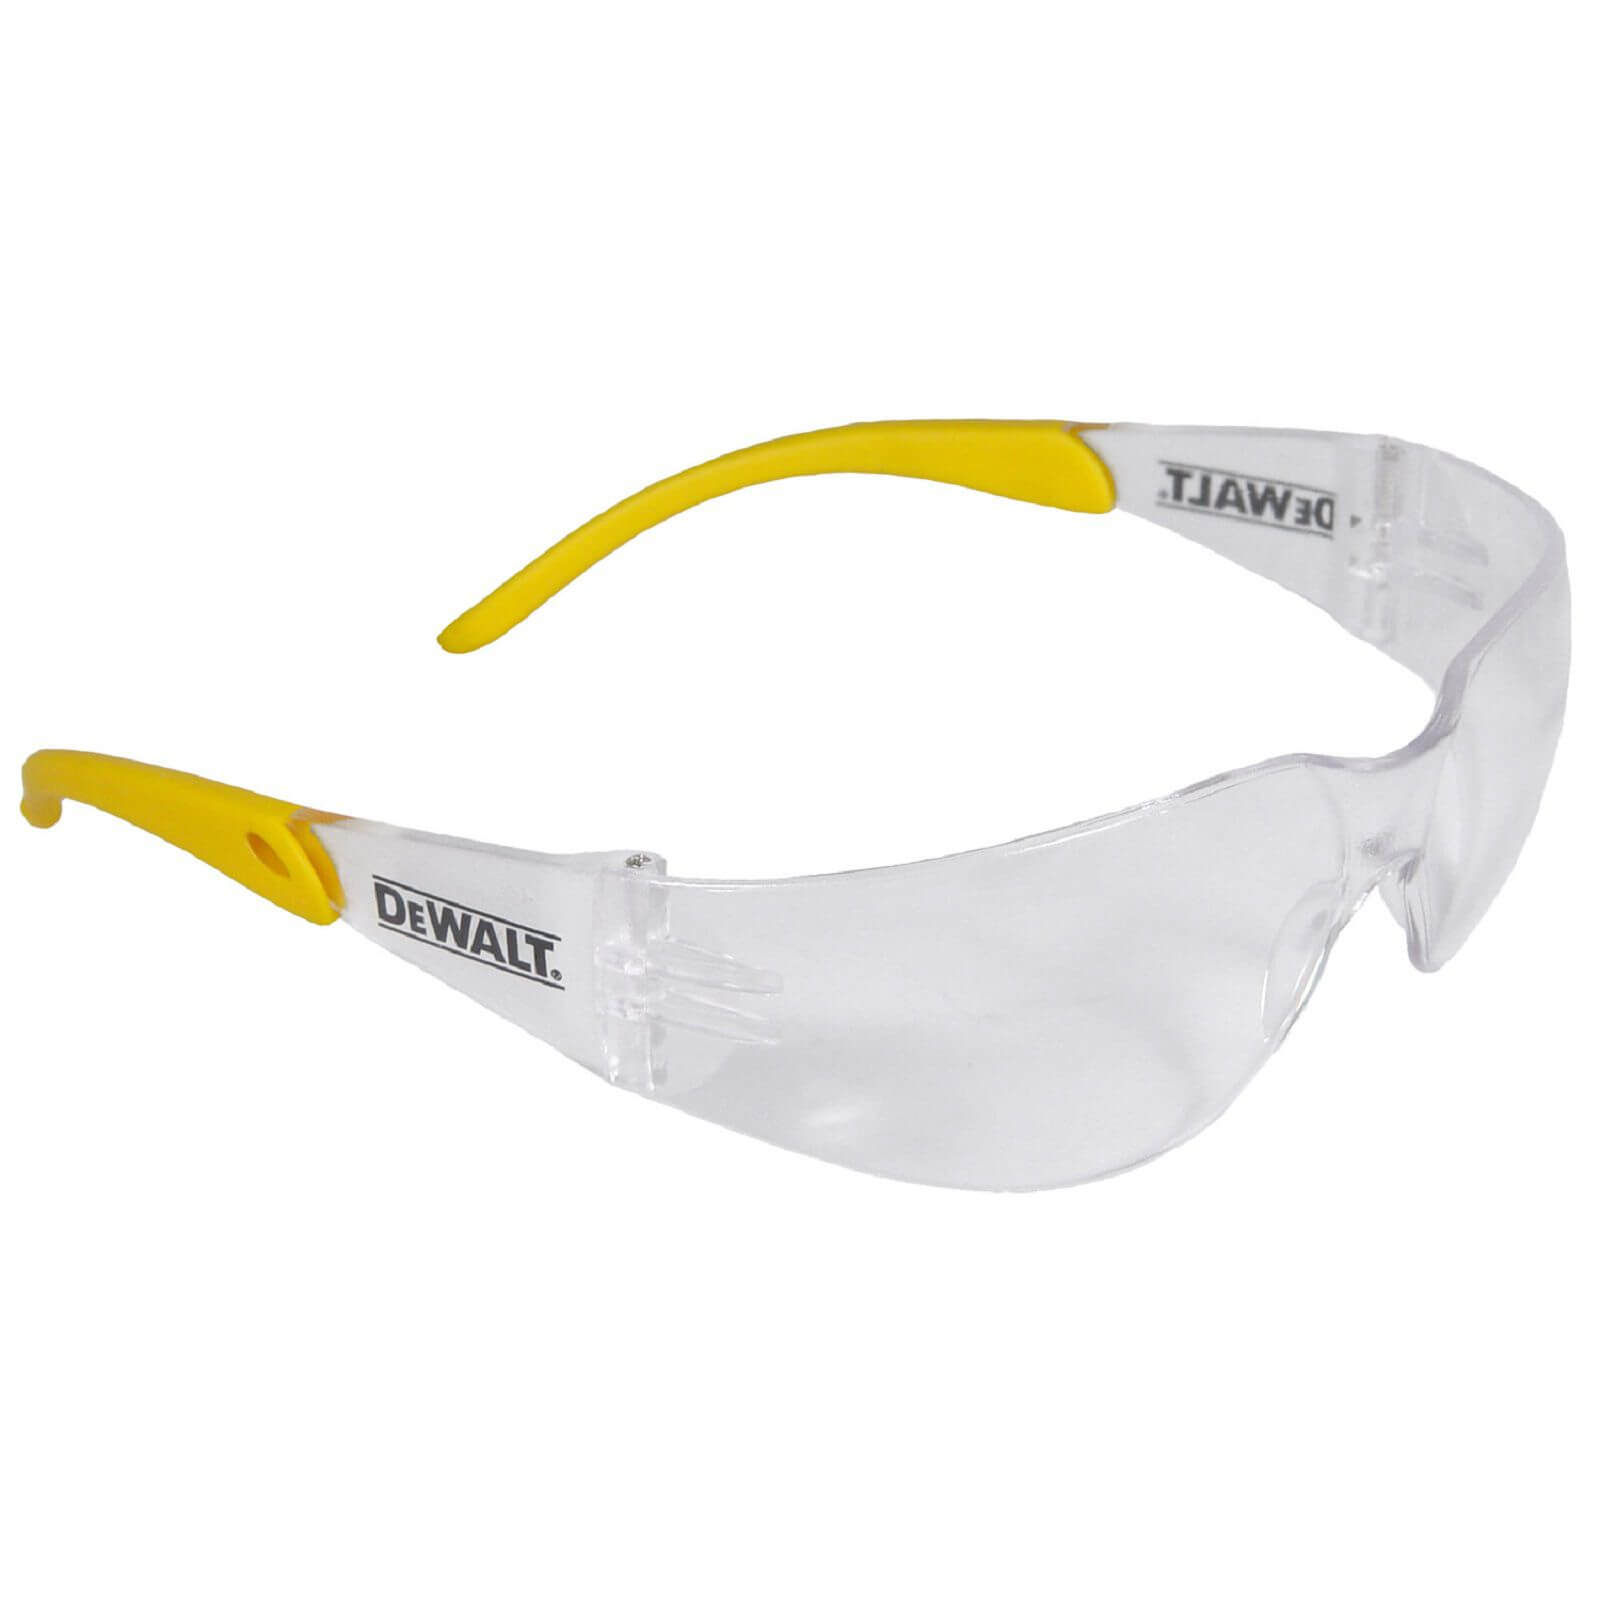 DeWalt DPG54 Protector Safety Glasses - Clear